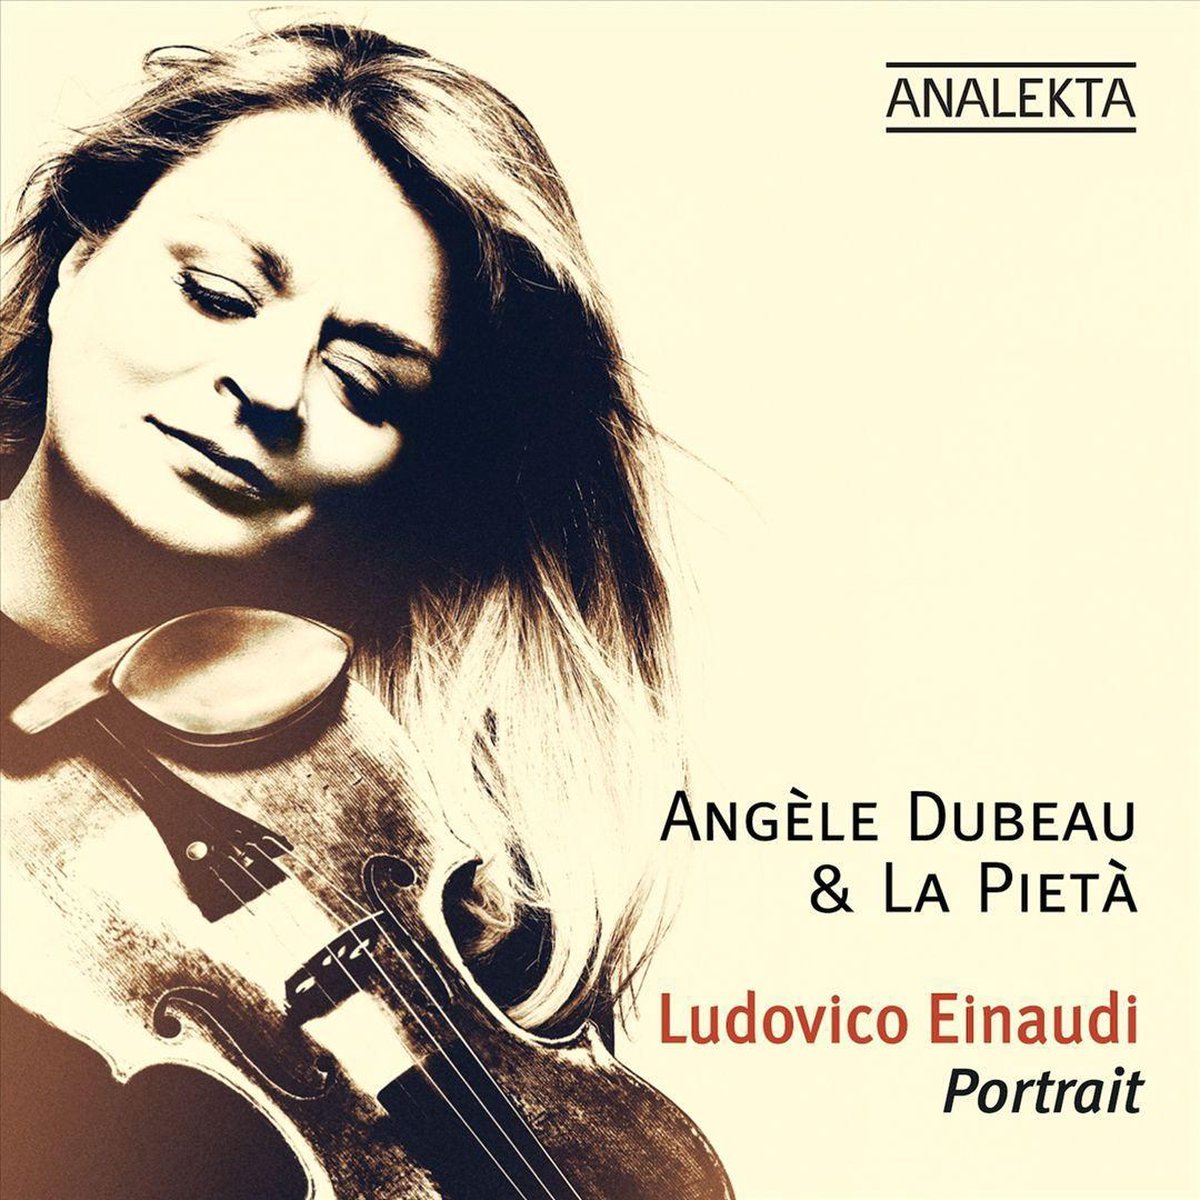 Angele Dubeau La Piet - Ludovico Einaudi Portrait